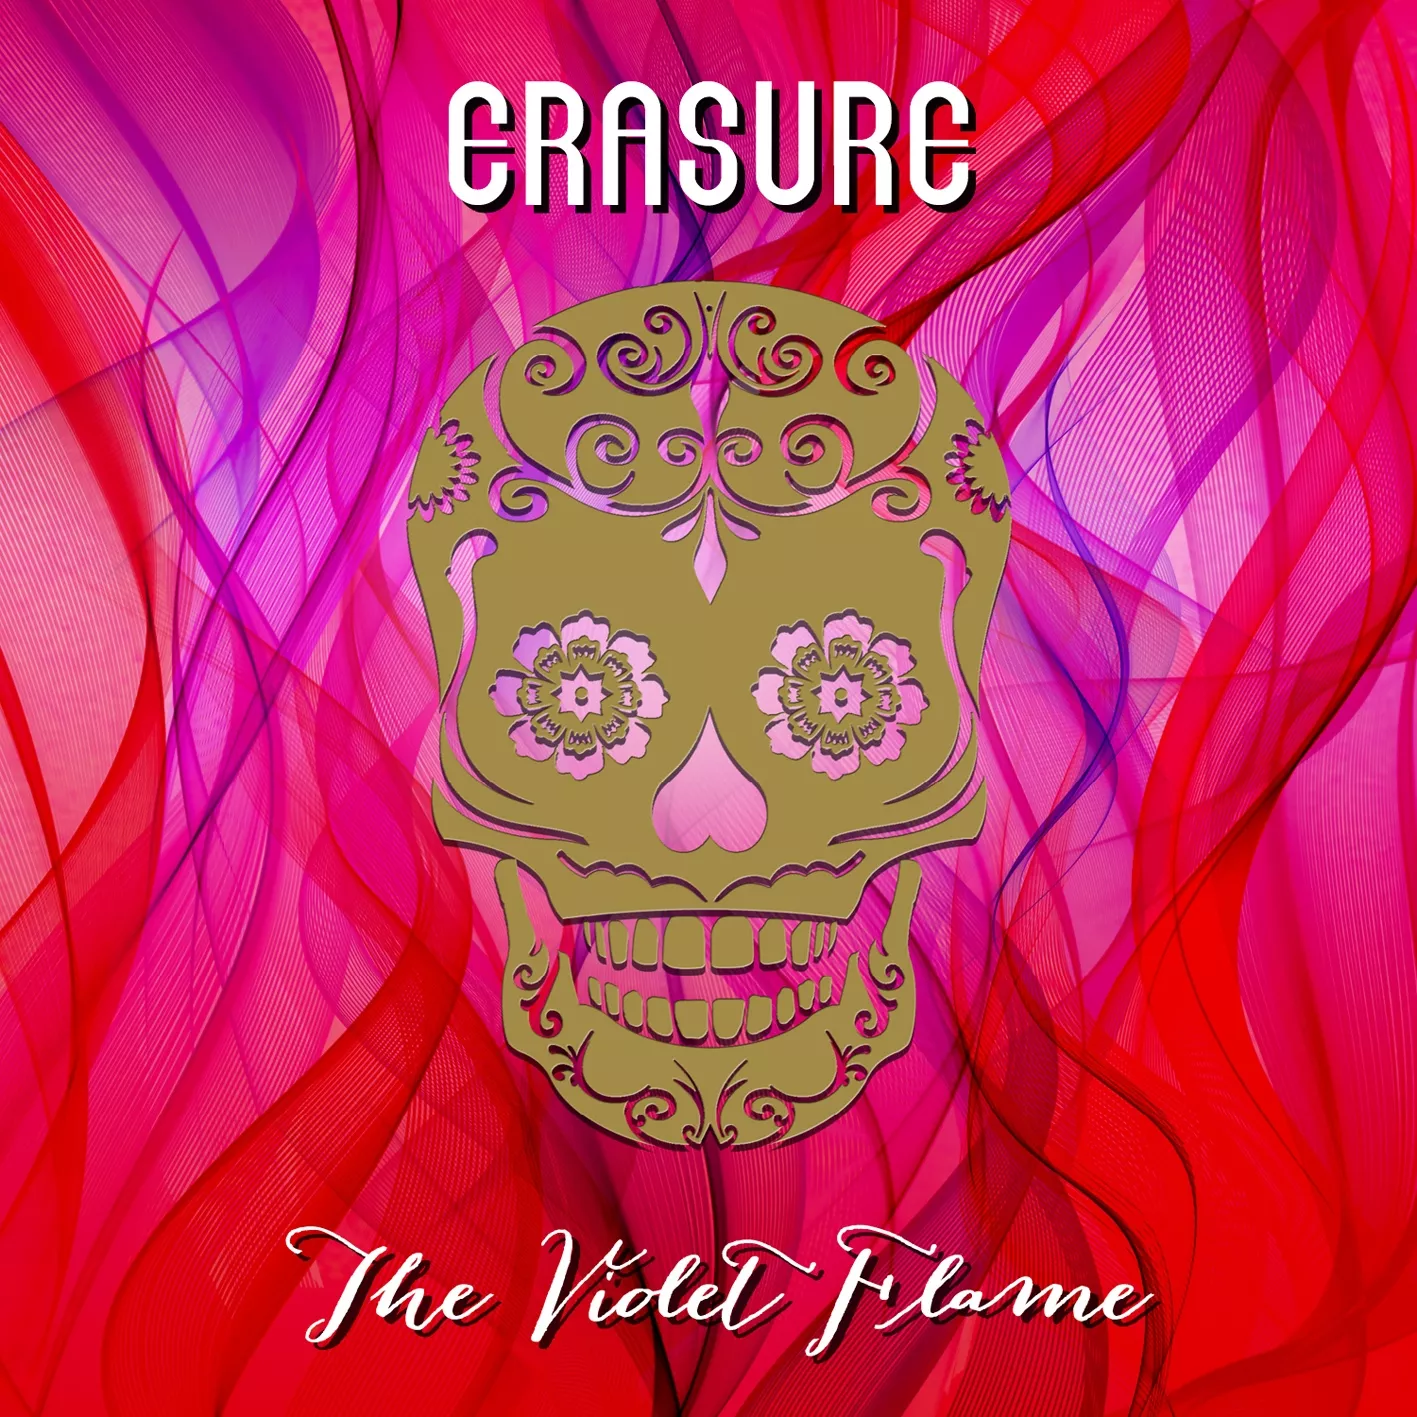 The Violet Flame - Erasure